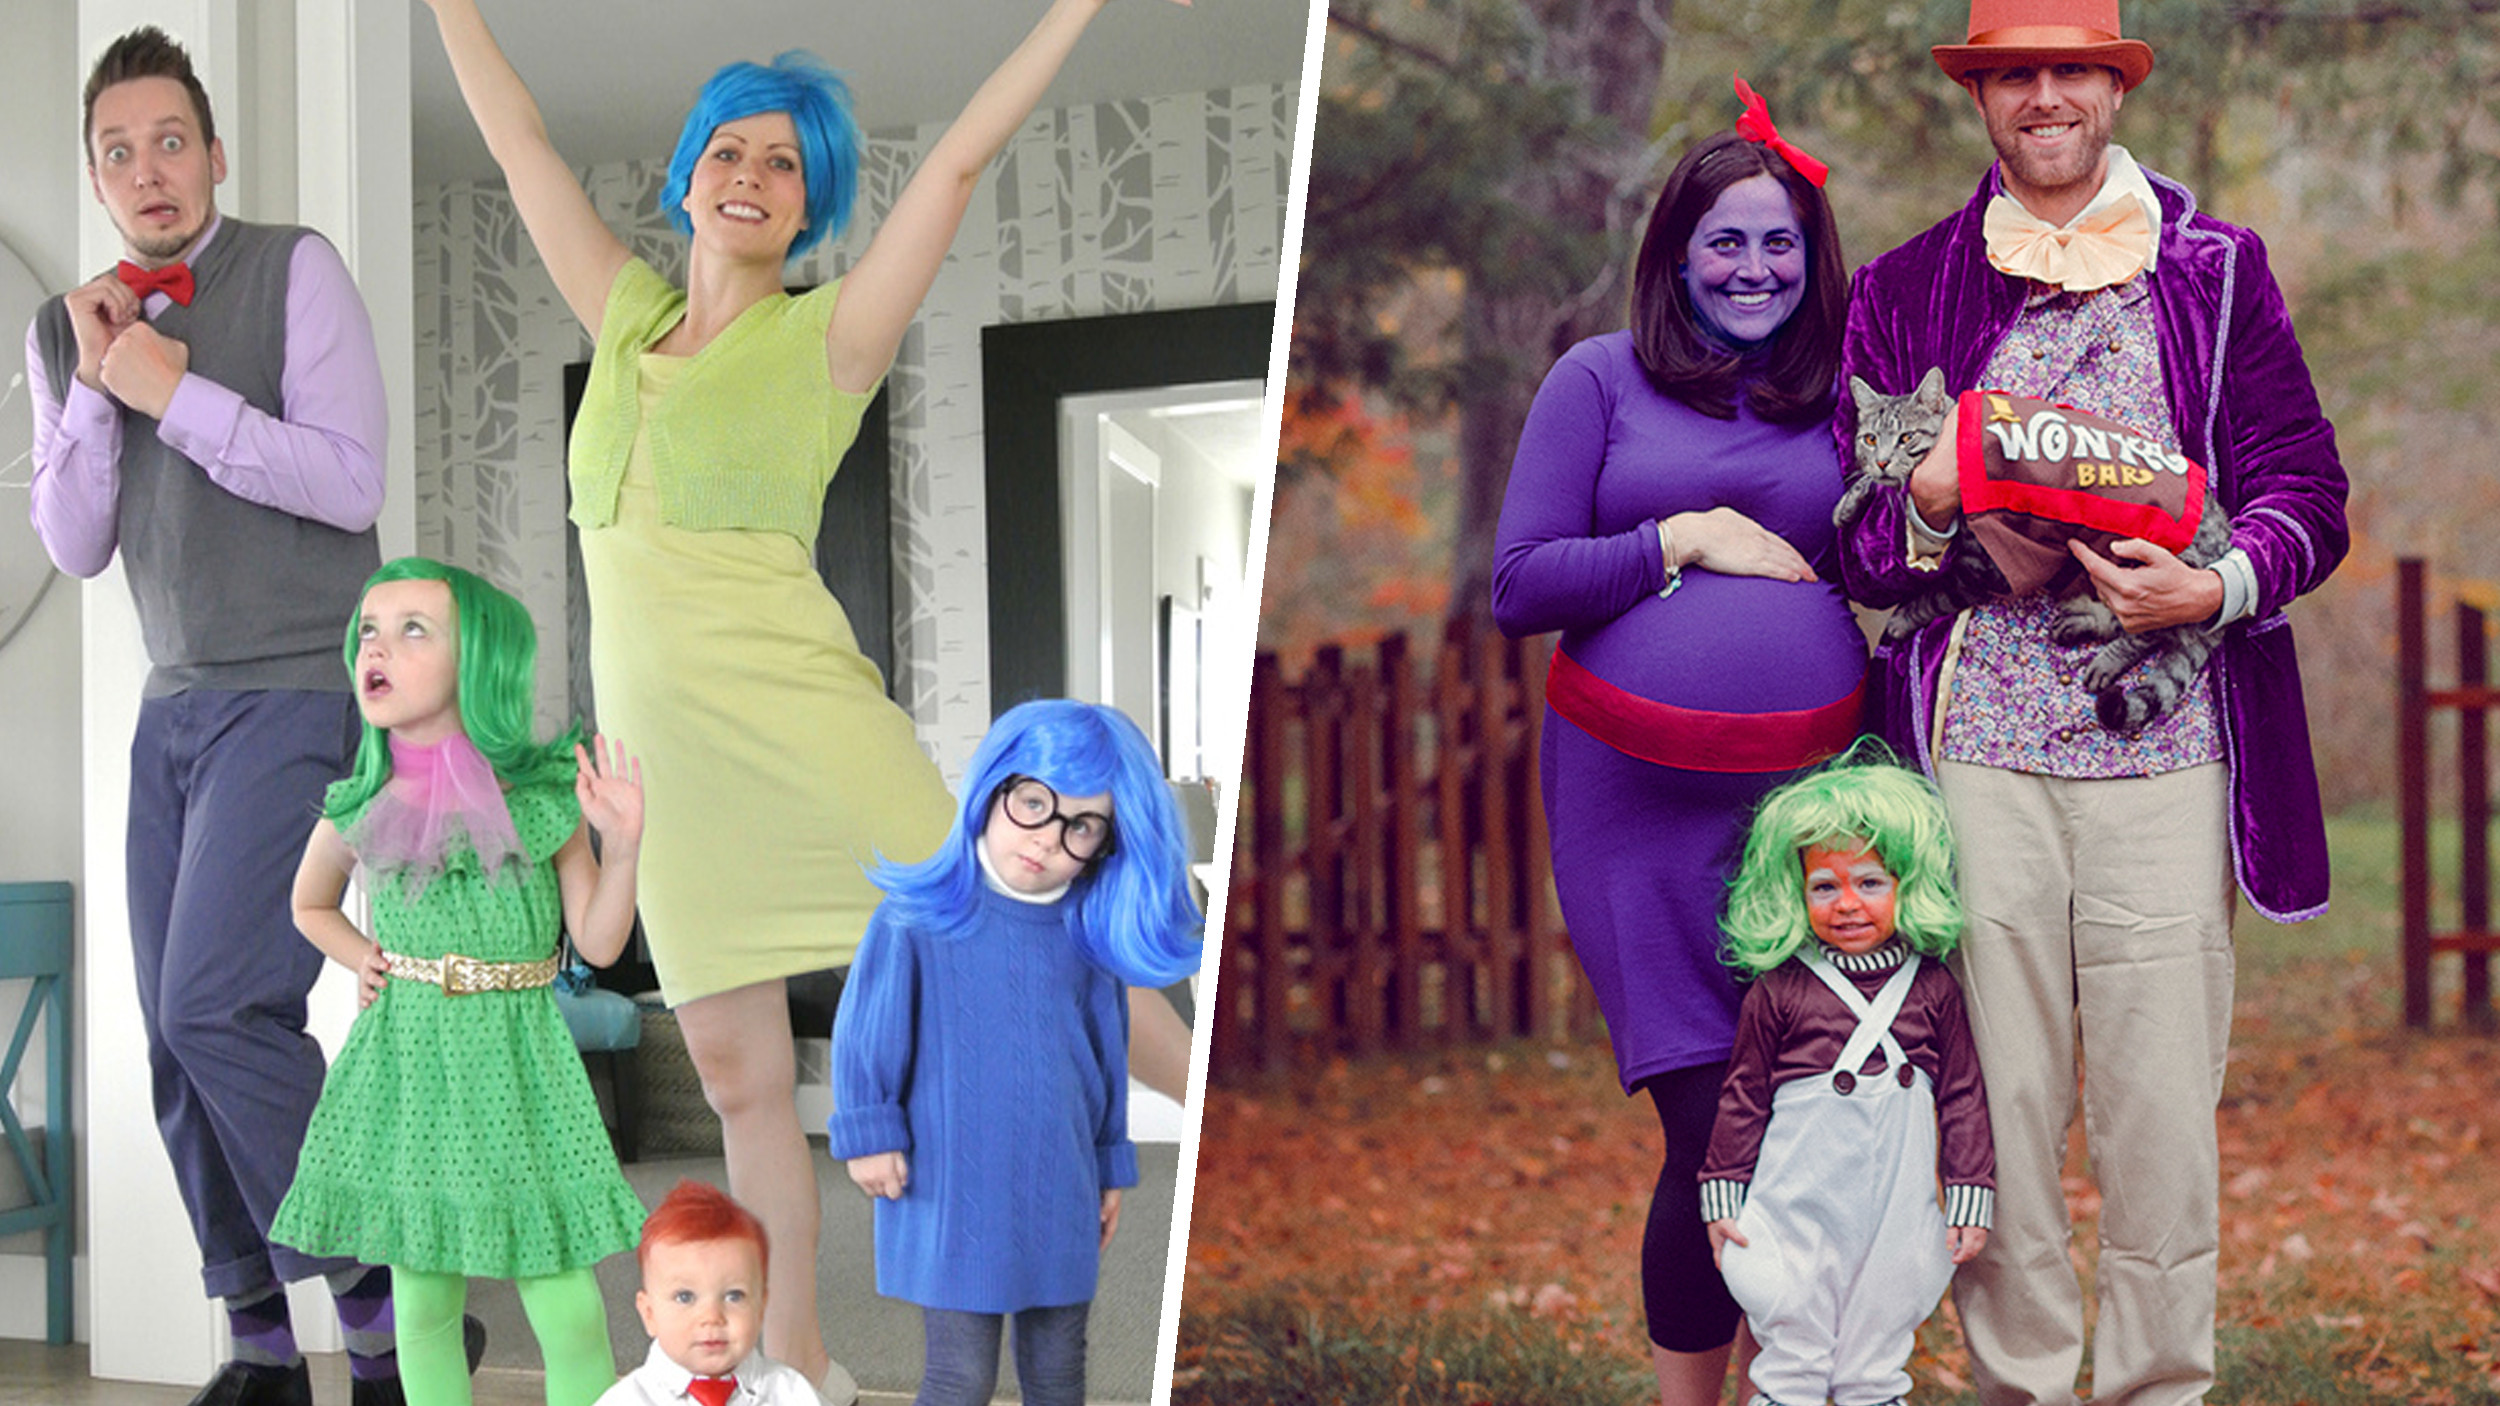 Family Of Four Halloween Costume Ideas
 Family Halloween costumes 8 Pinterest ideas to inspire